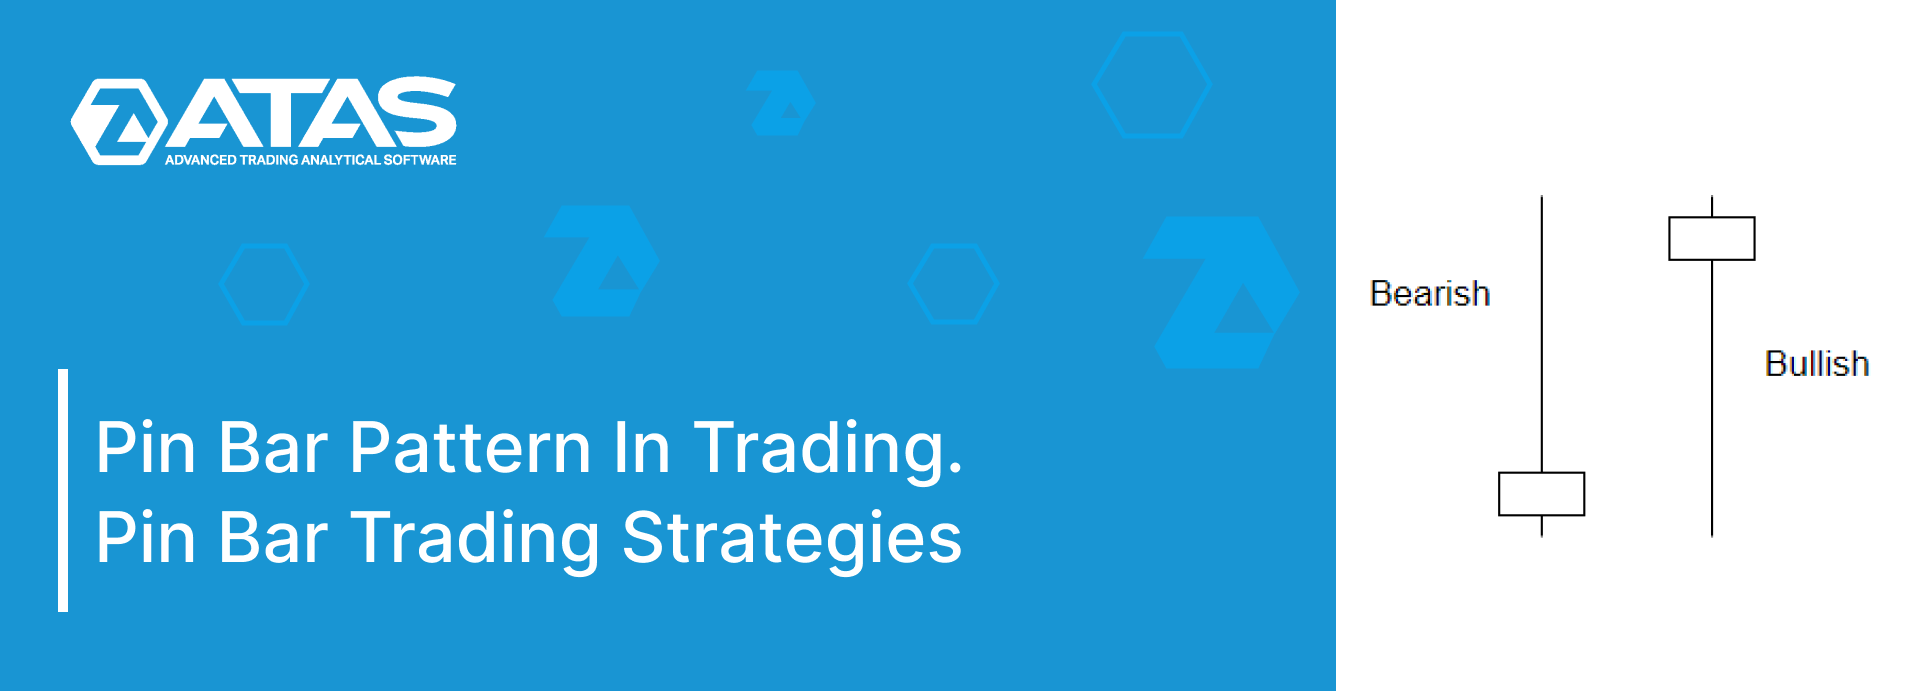 Pin bar pattern in trading. Pin bar trading strategies